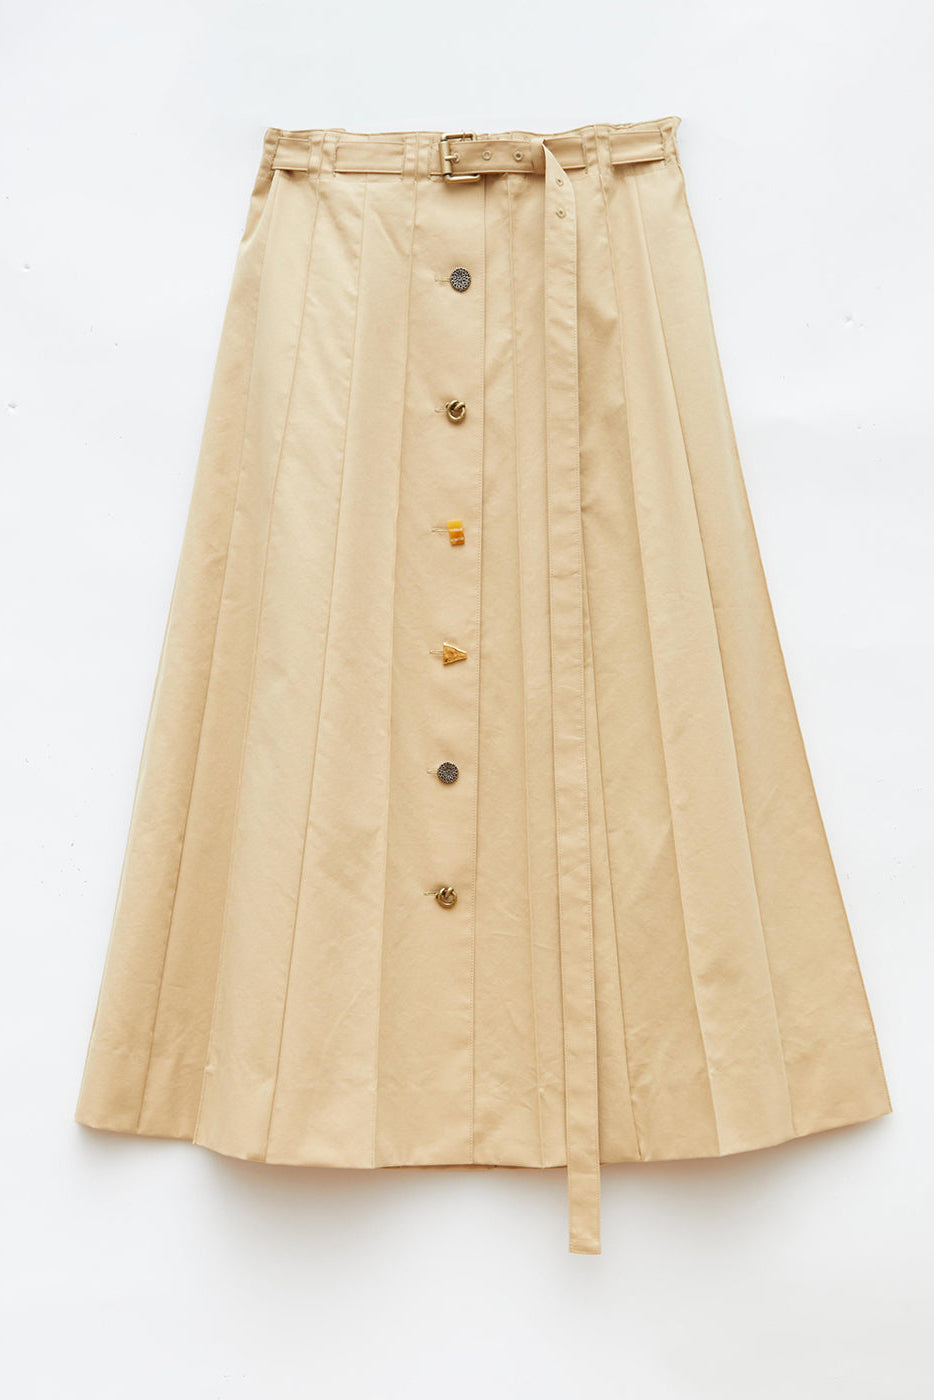 Noor Skirt in Tan by Rejina Pyo http://www.shoprecital.com